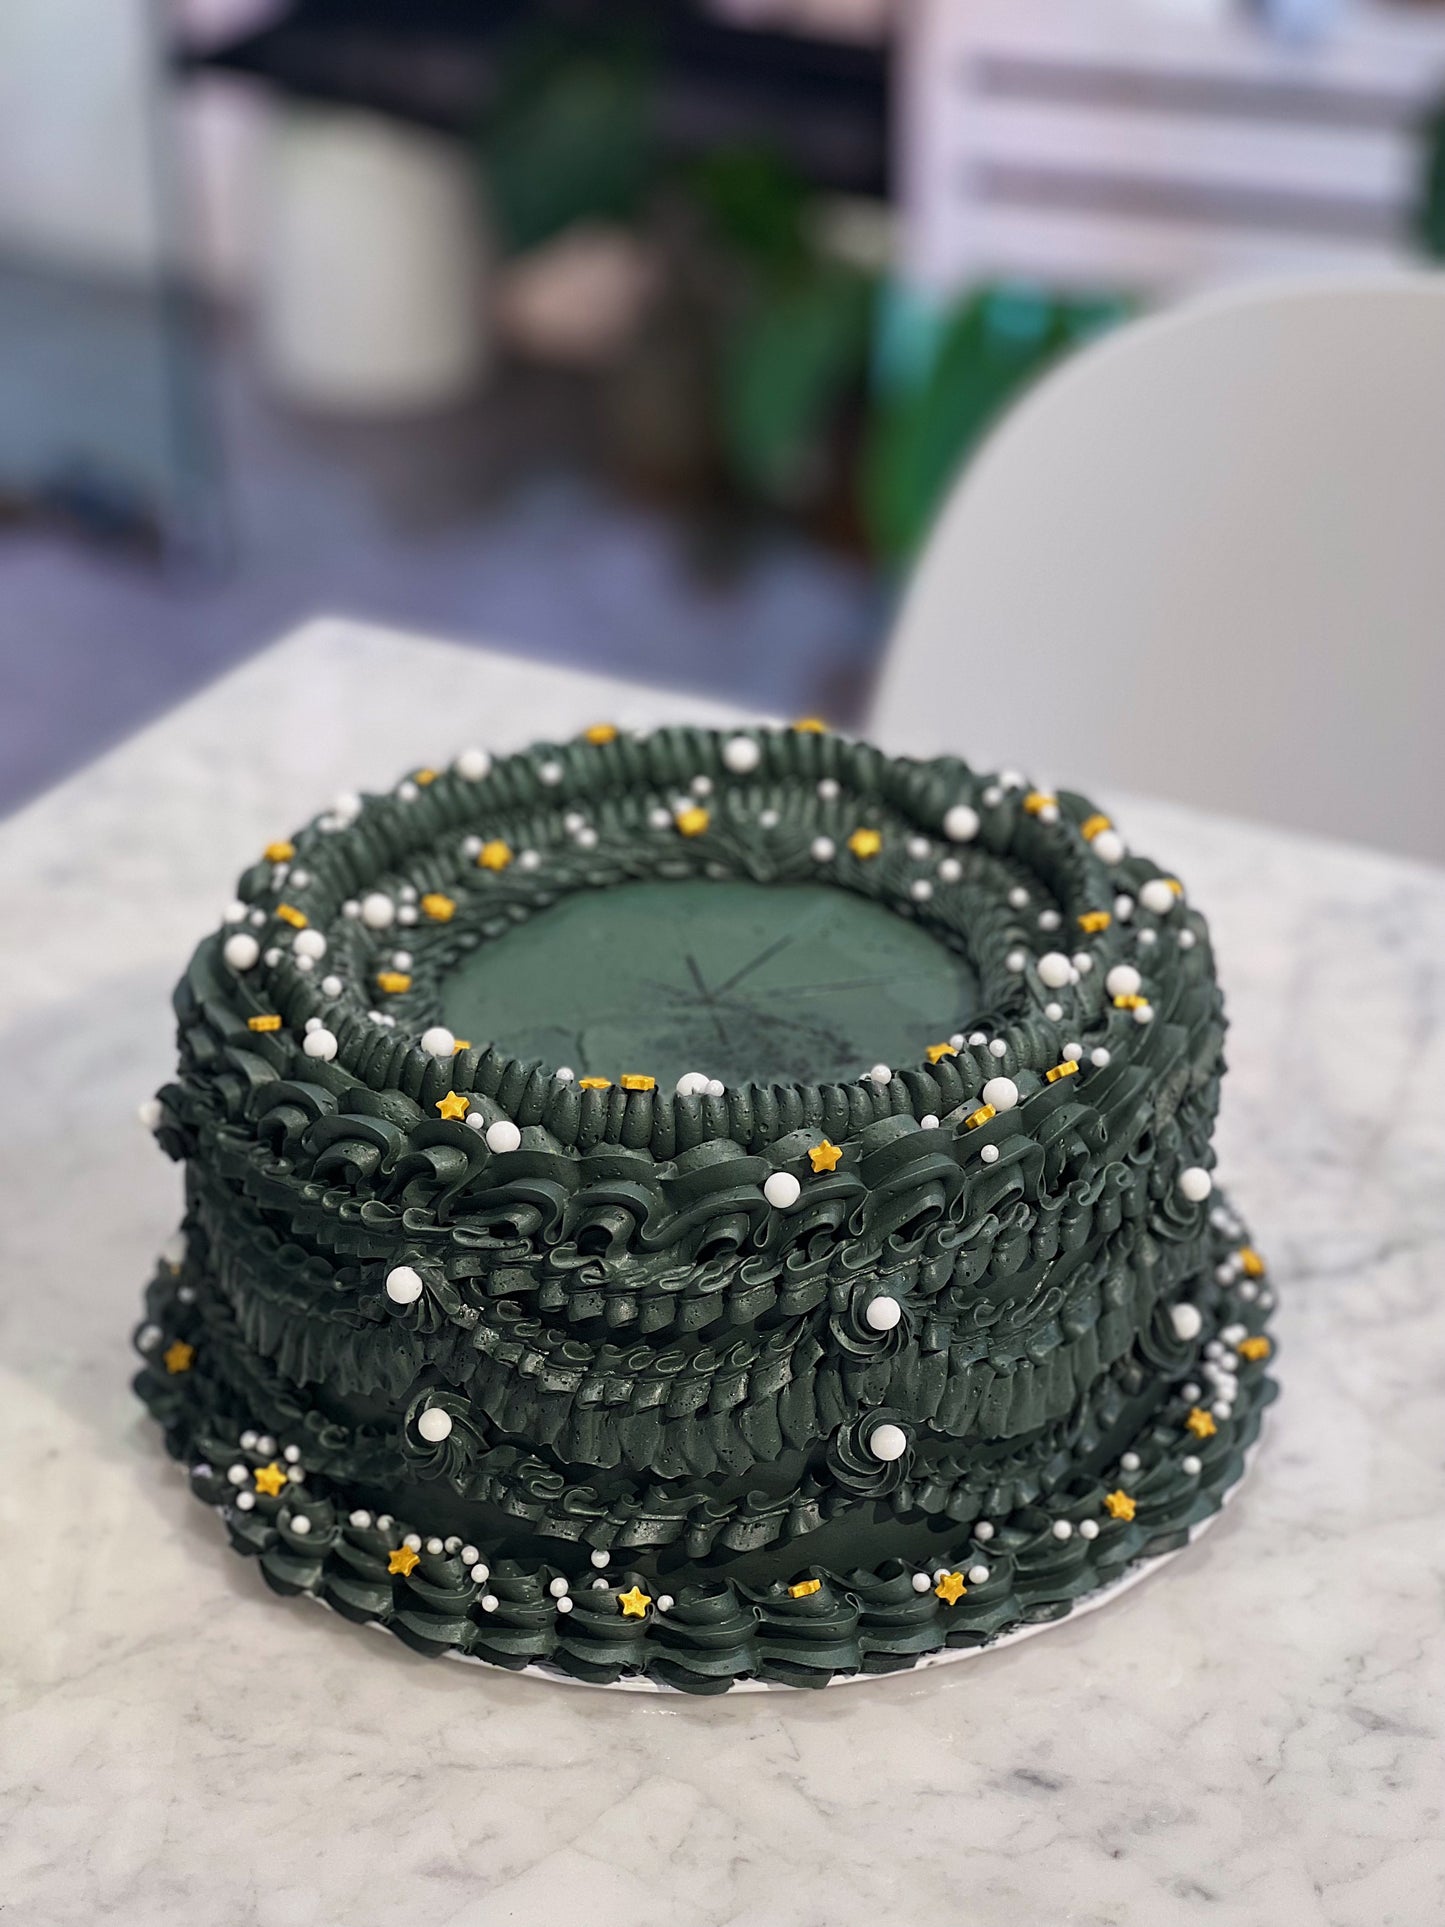 SINFULCAKES - VINTAGE ROUND CAKE